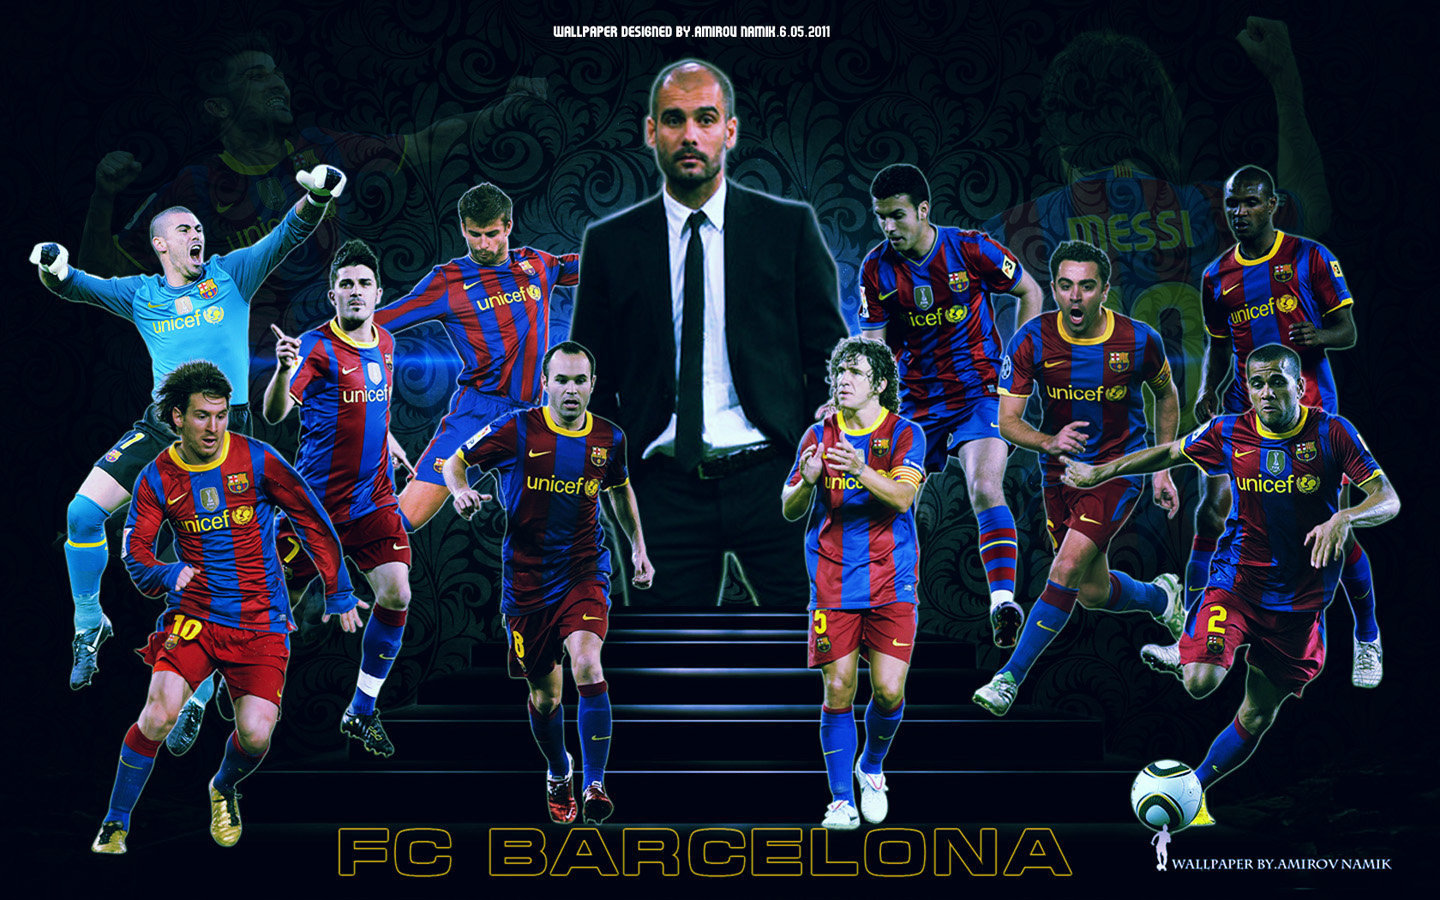 barcelona players wallpaper,team,football player,soccer player,player,fictional character